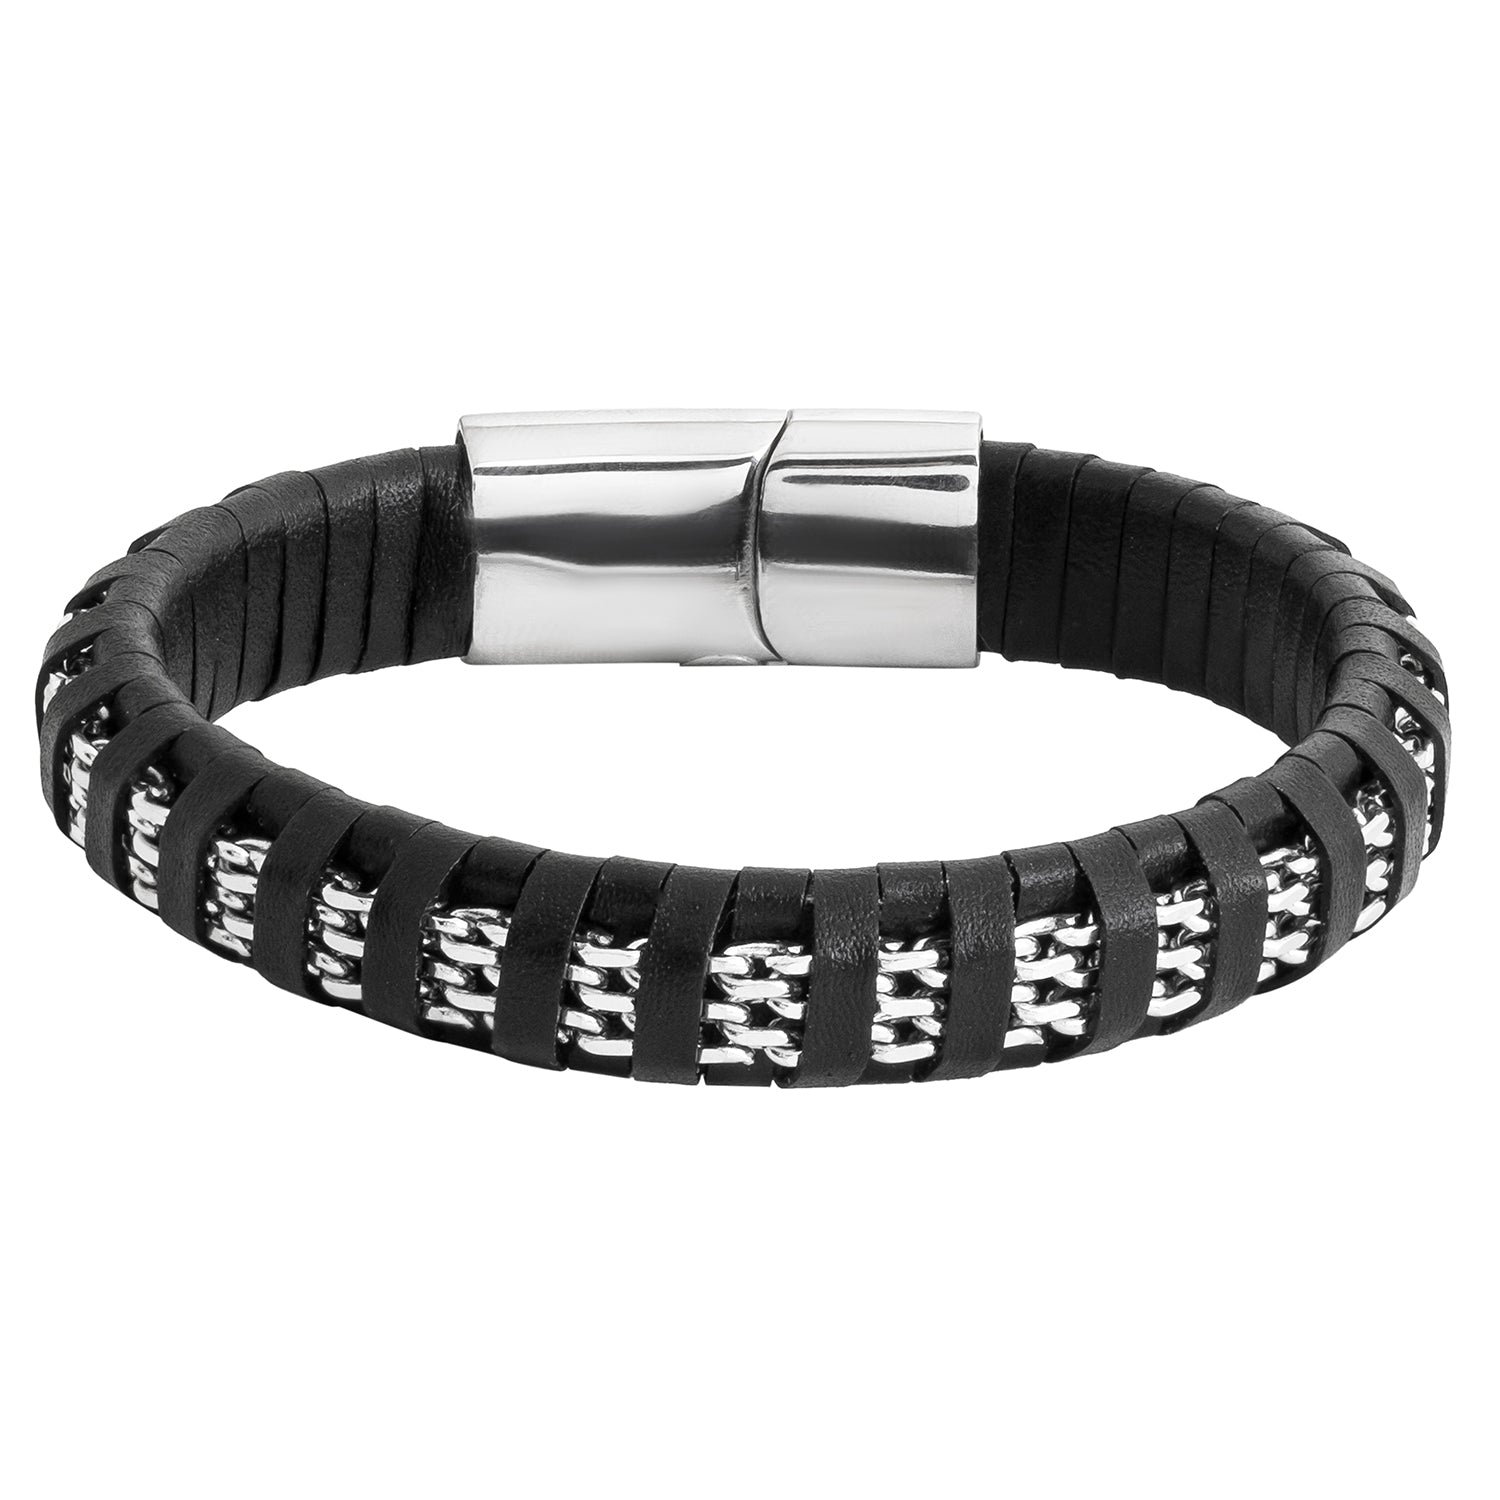 Solid 925 Sterling Silver Bracelet Curb Chain Mens Boys Italian Style Heavy  | eBay